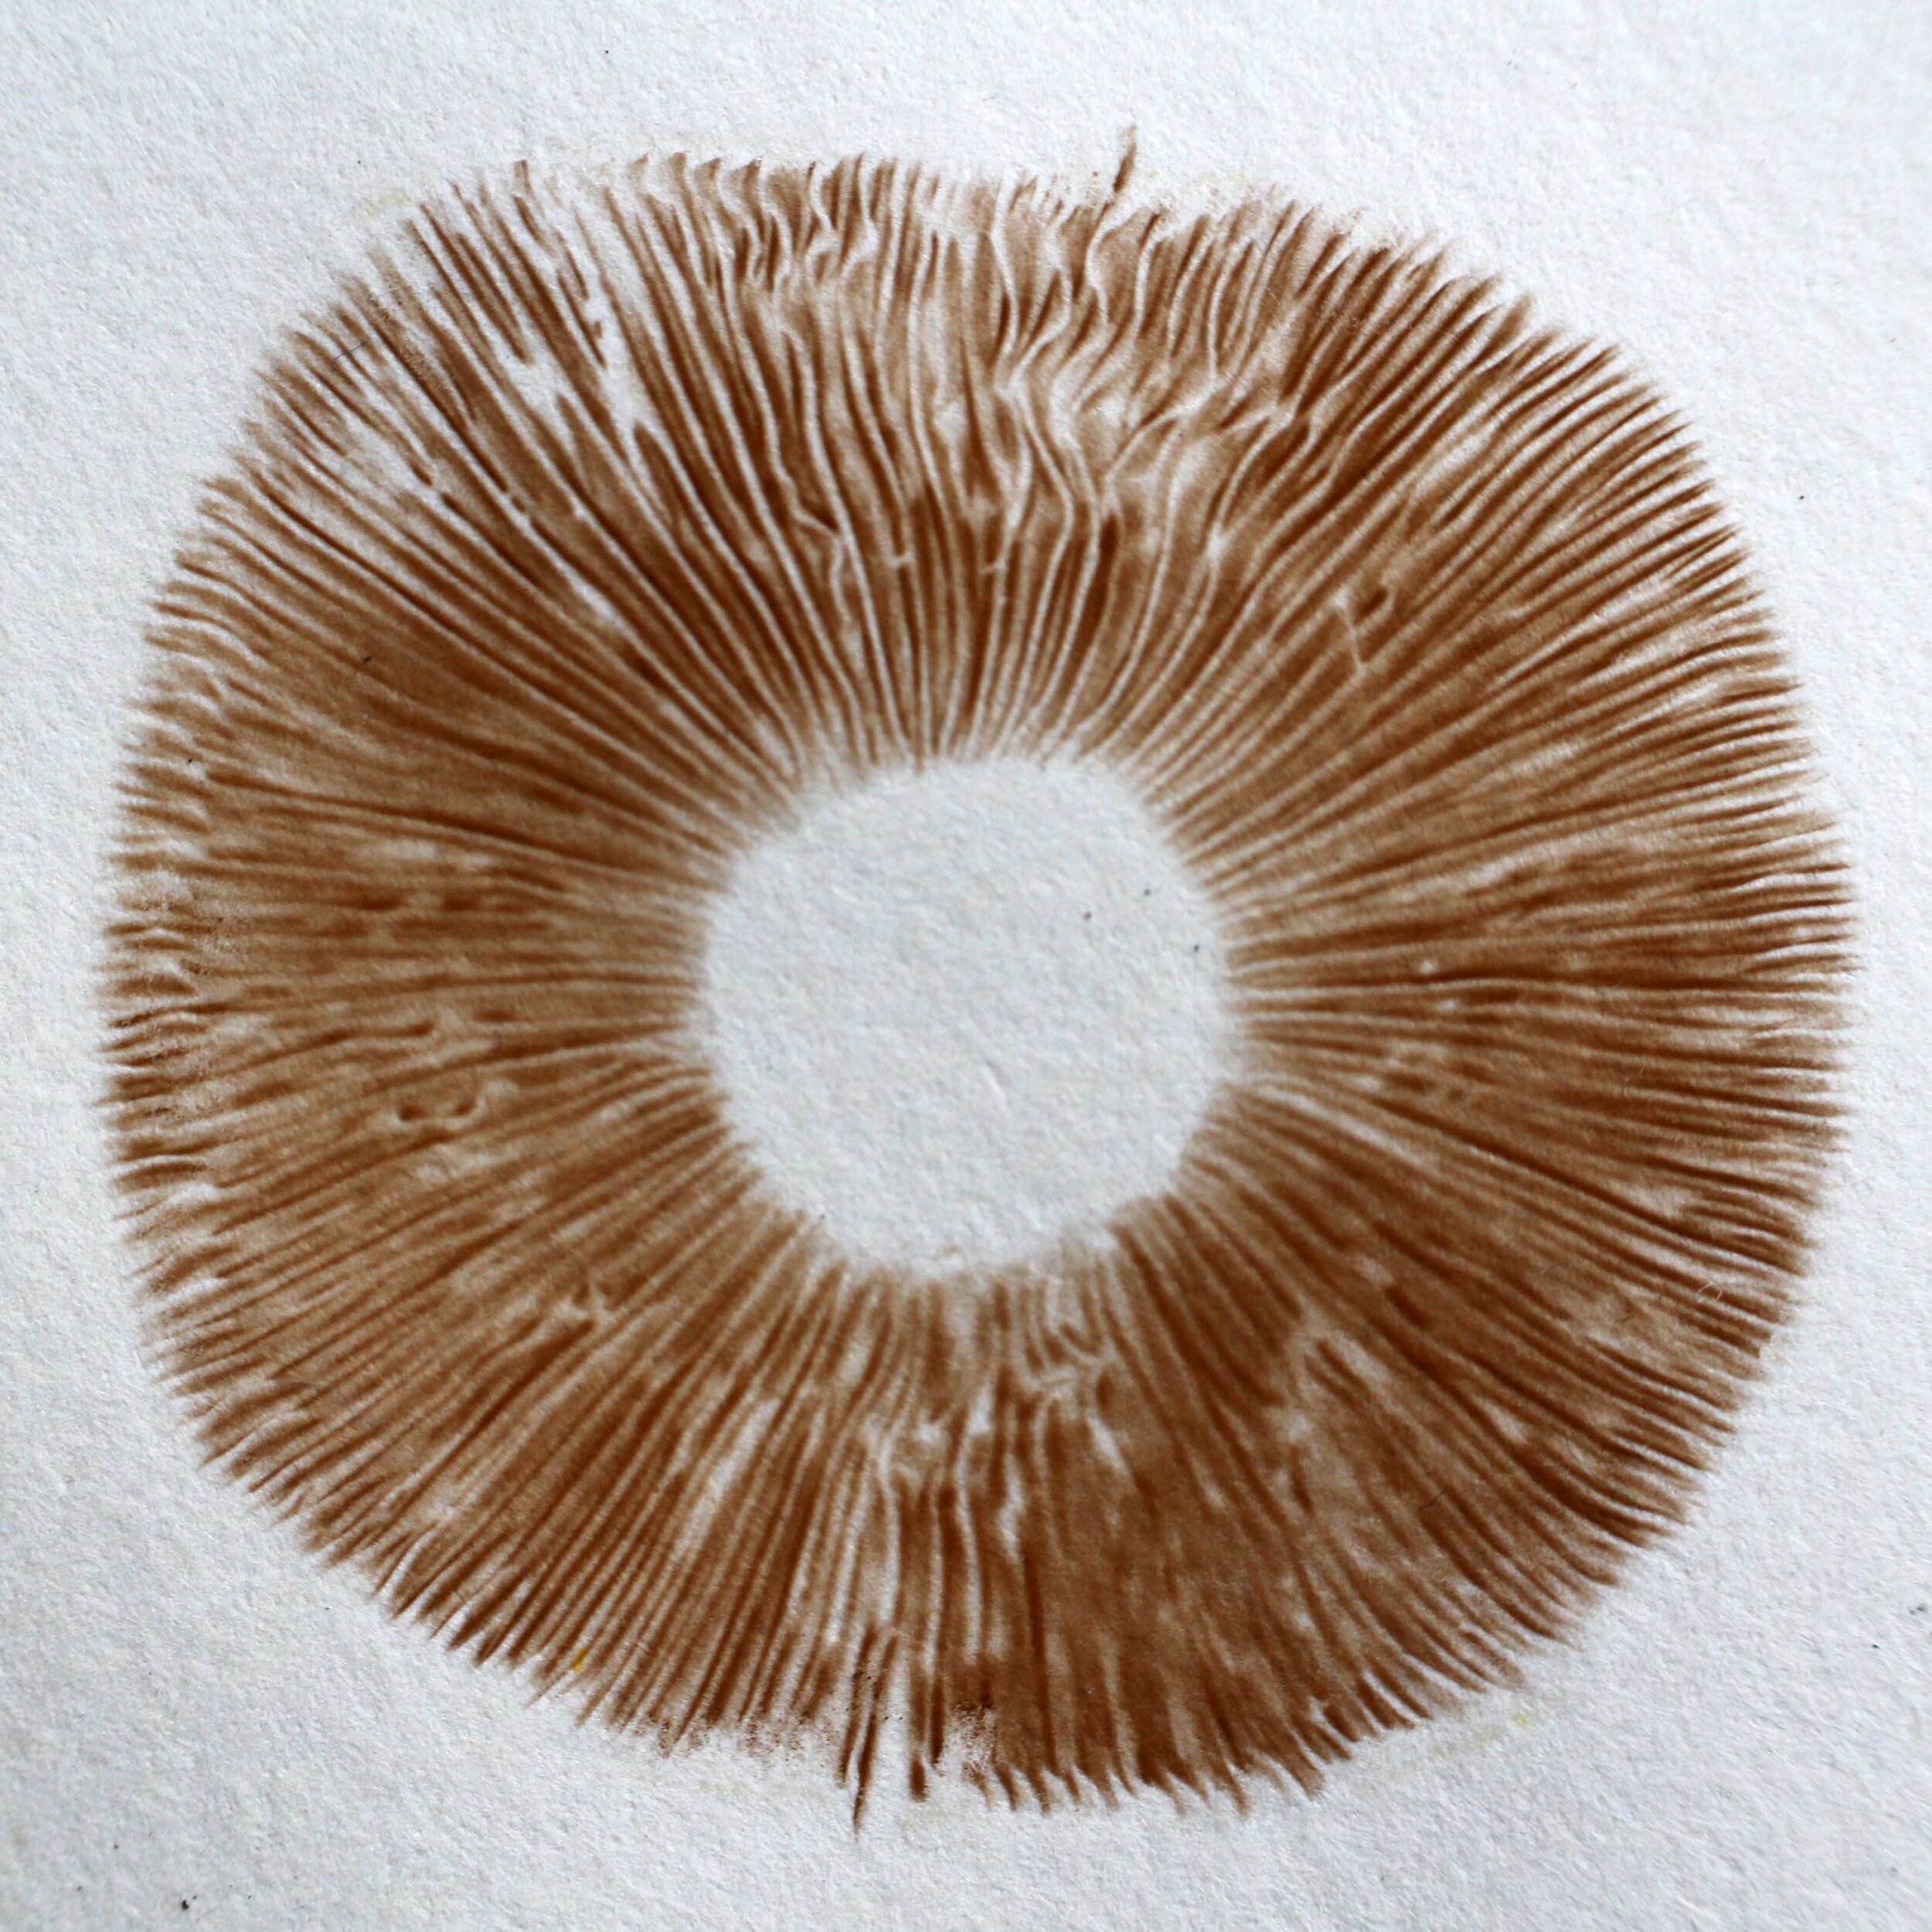 Spore Print of Cortinarius